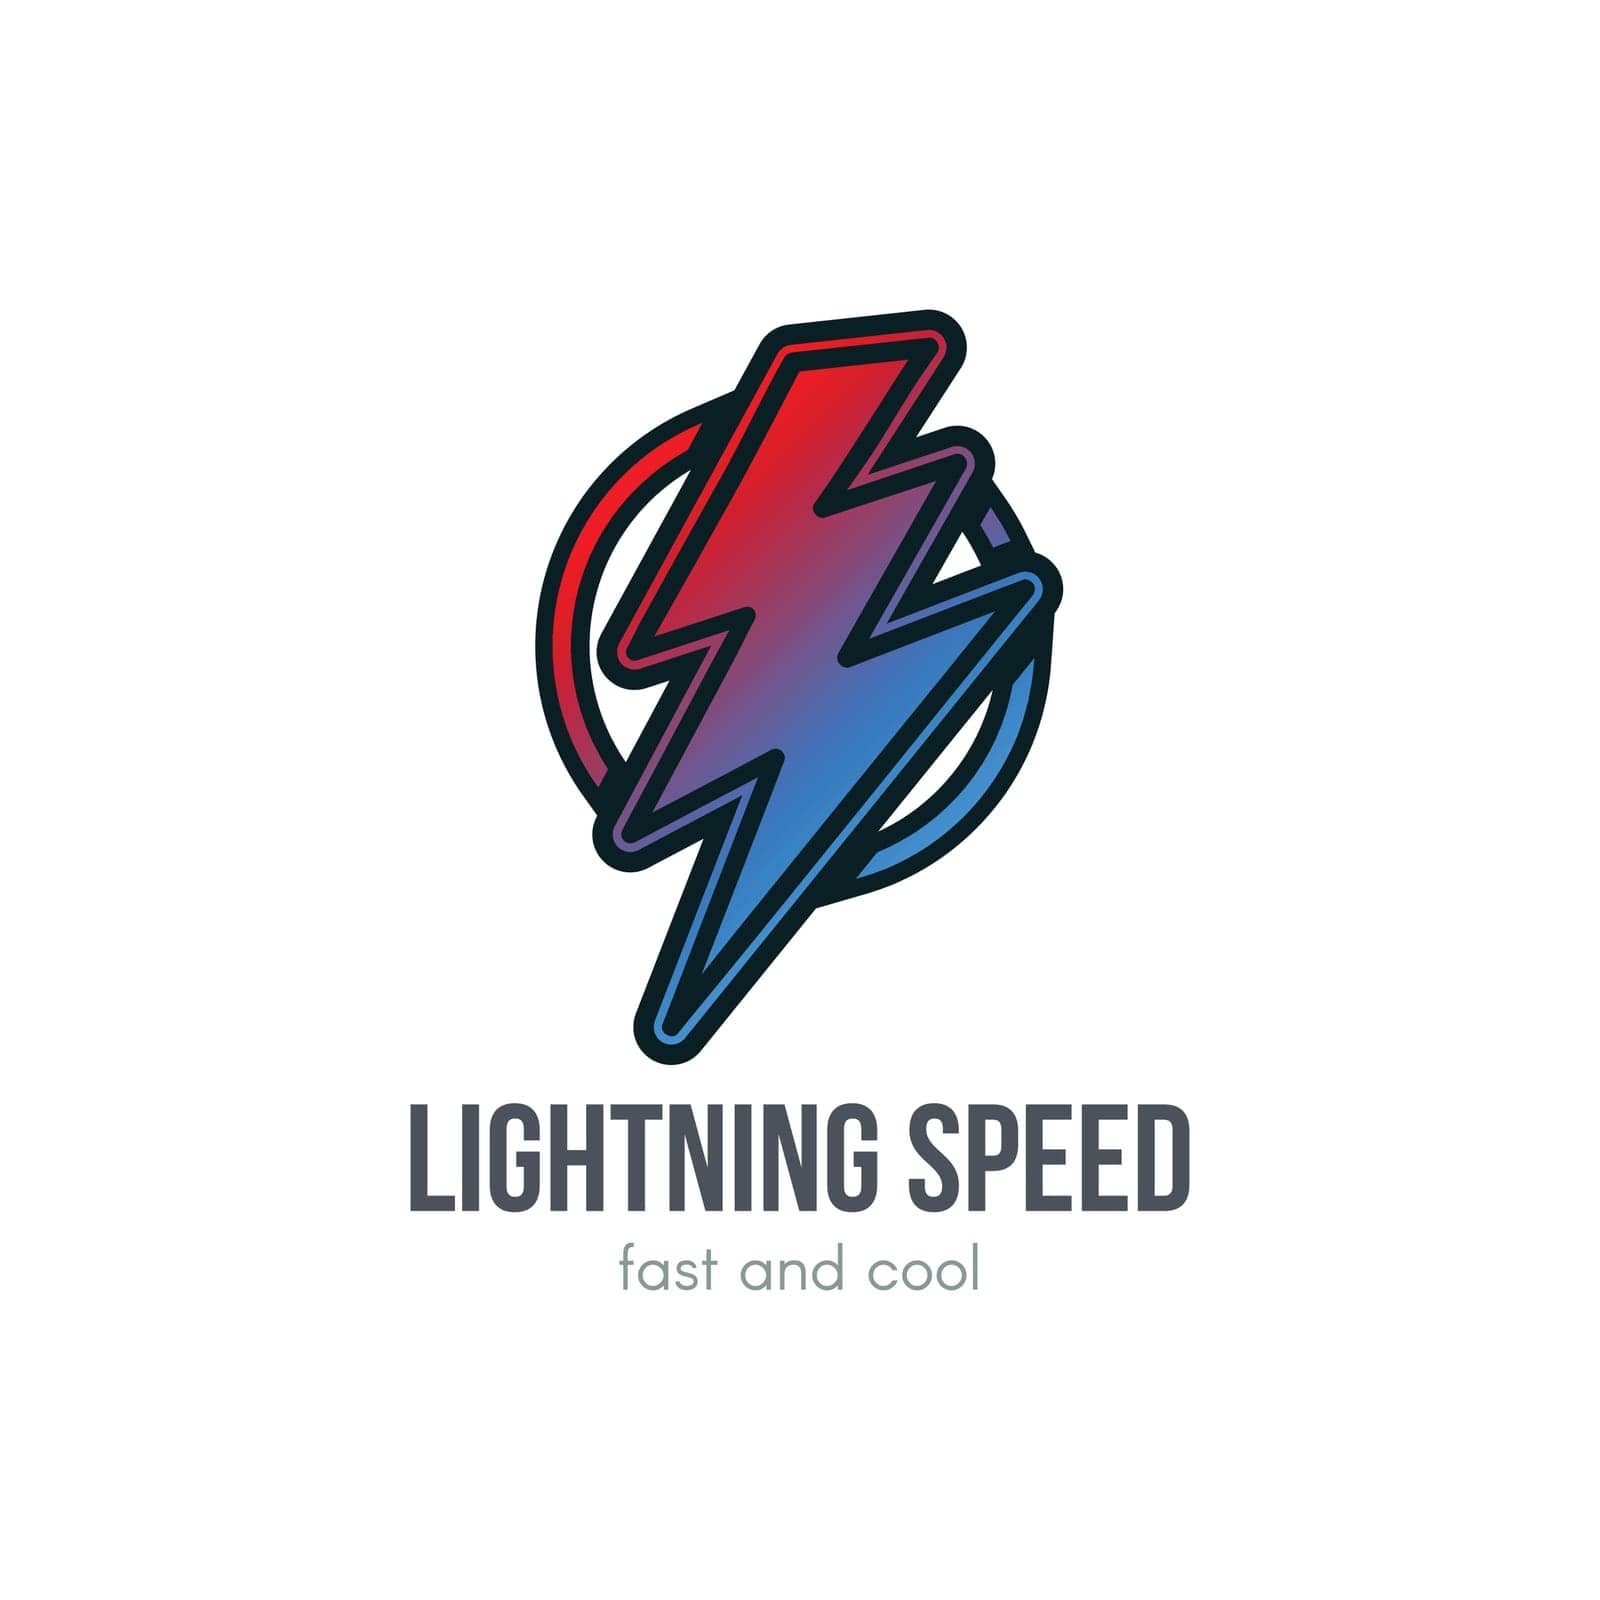 Thunder cartoon gradient illustration. Lightning bolt in circle. Speed, energy hand drawn symbol